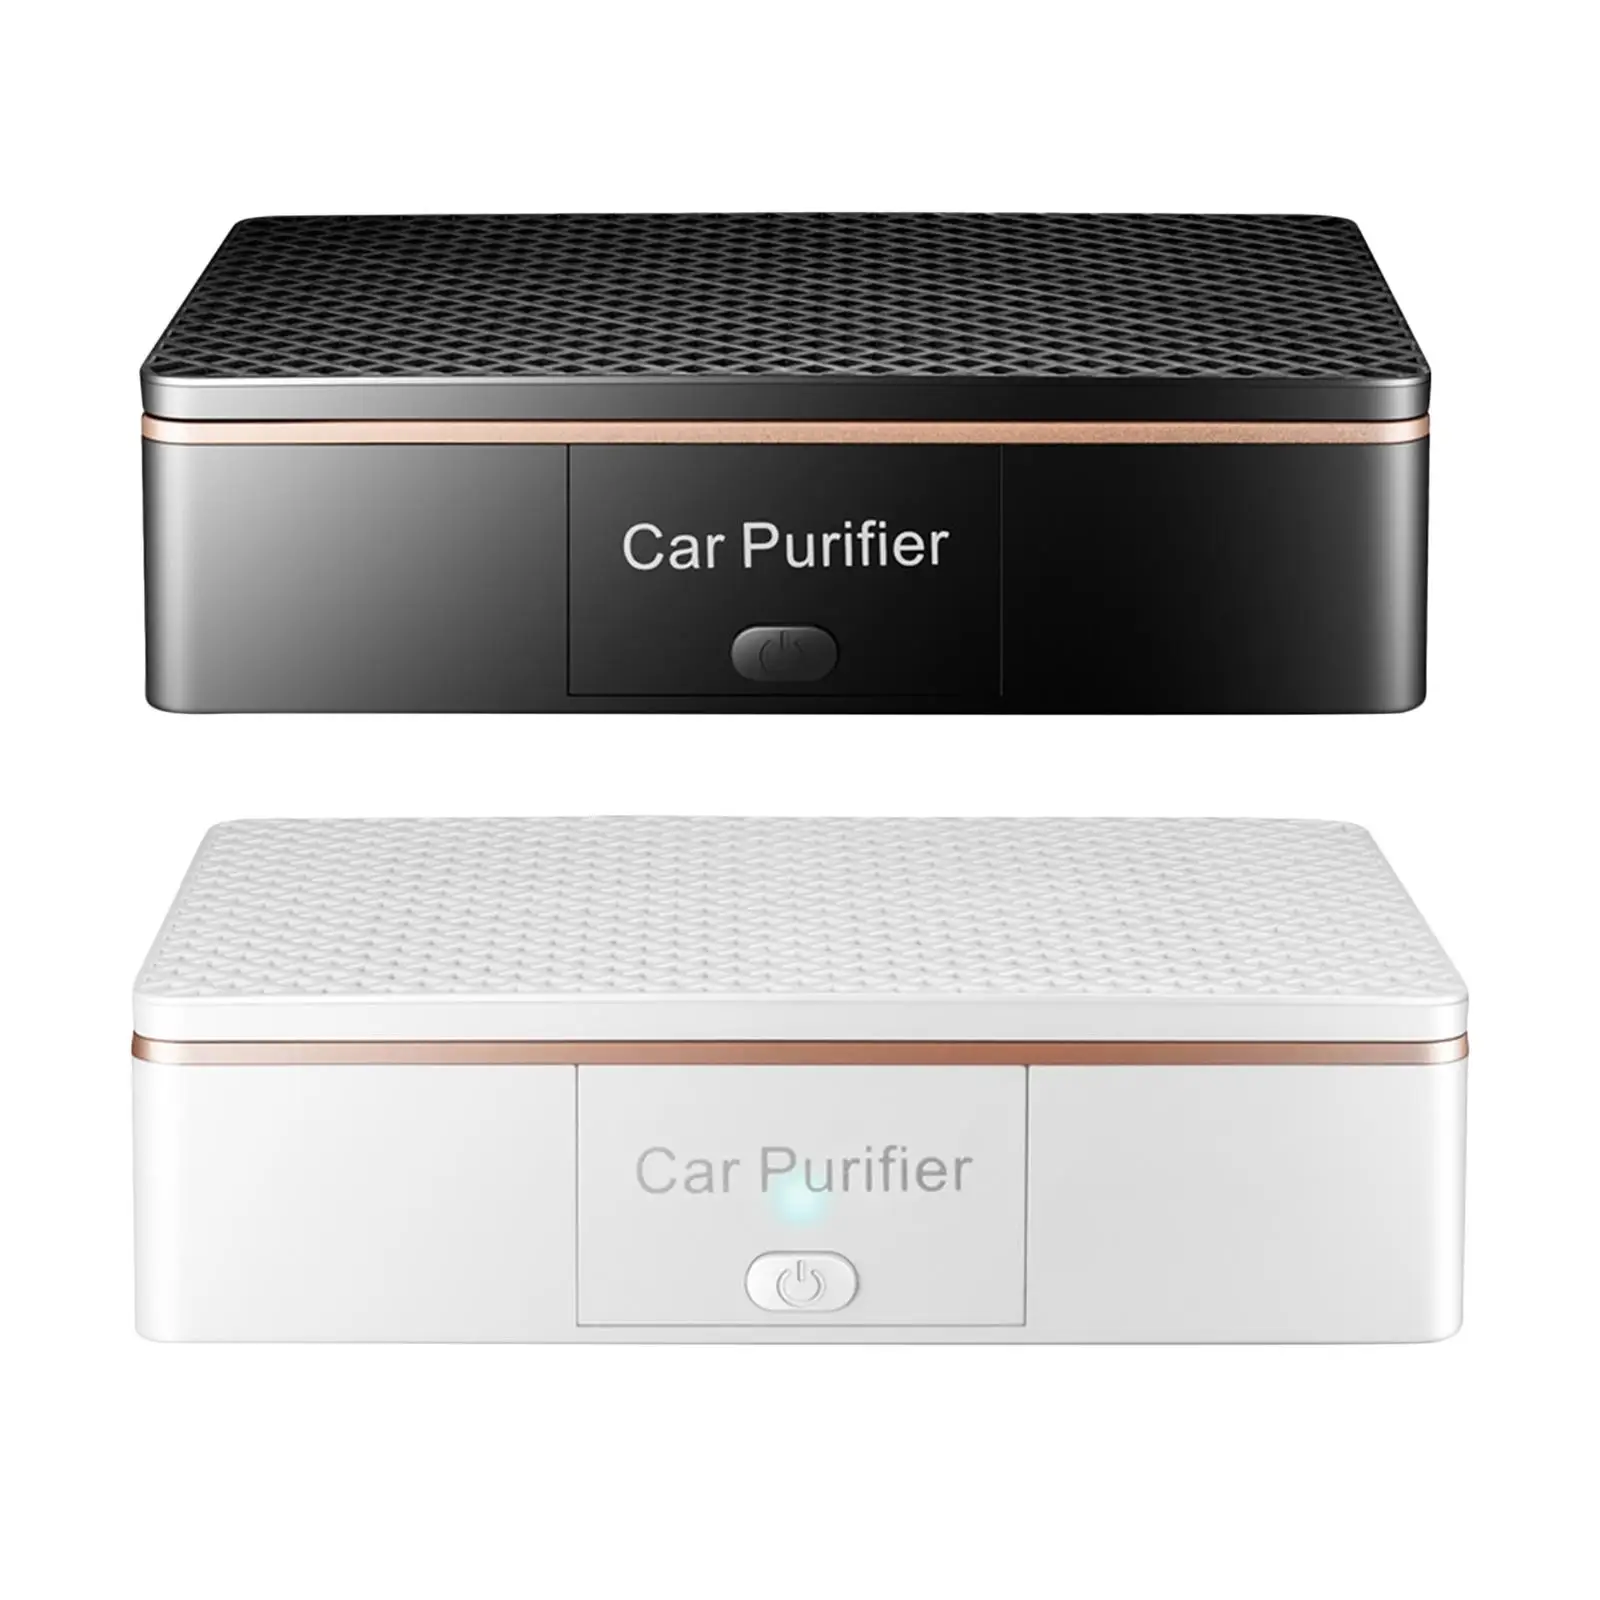 Car Air Purifier Air Cleaner Deodorizer Ionizer for Home Office 180x128x48mm